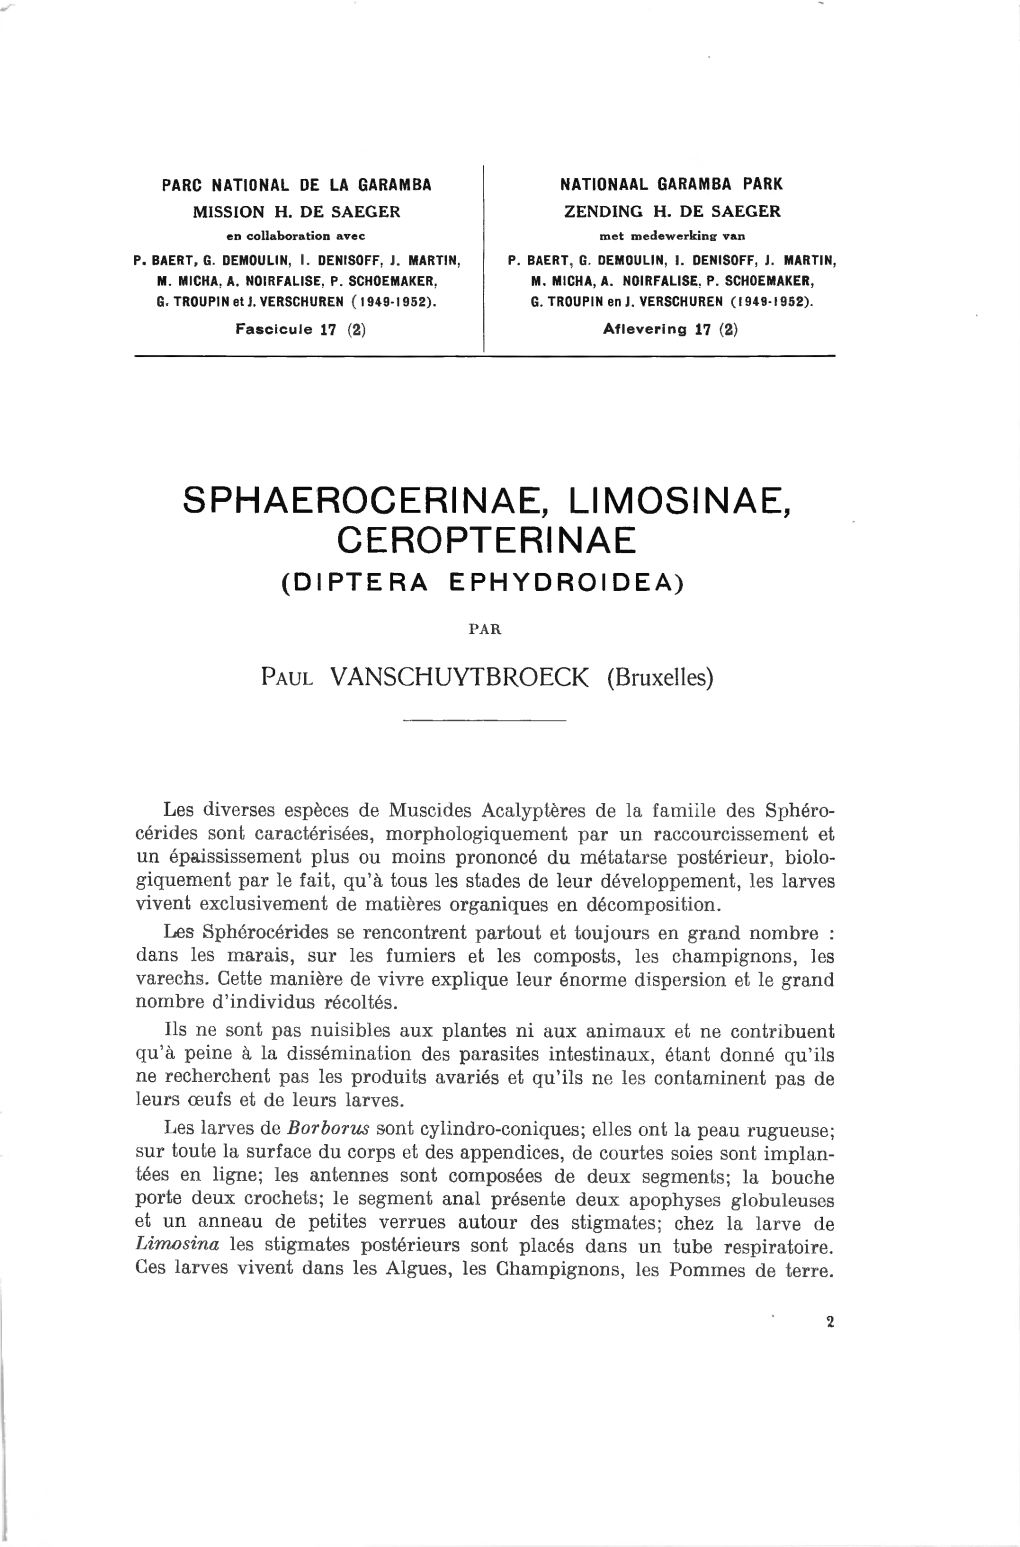 Sphaerocerinae, Limosinae, Ceropterinae (Diptera Ephydroidea)